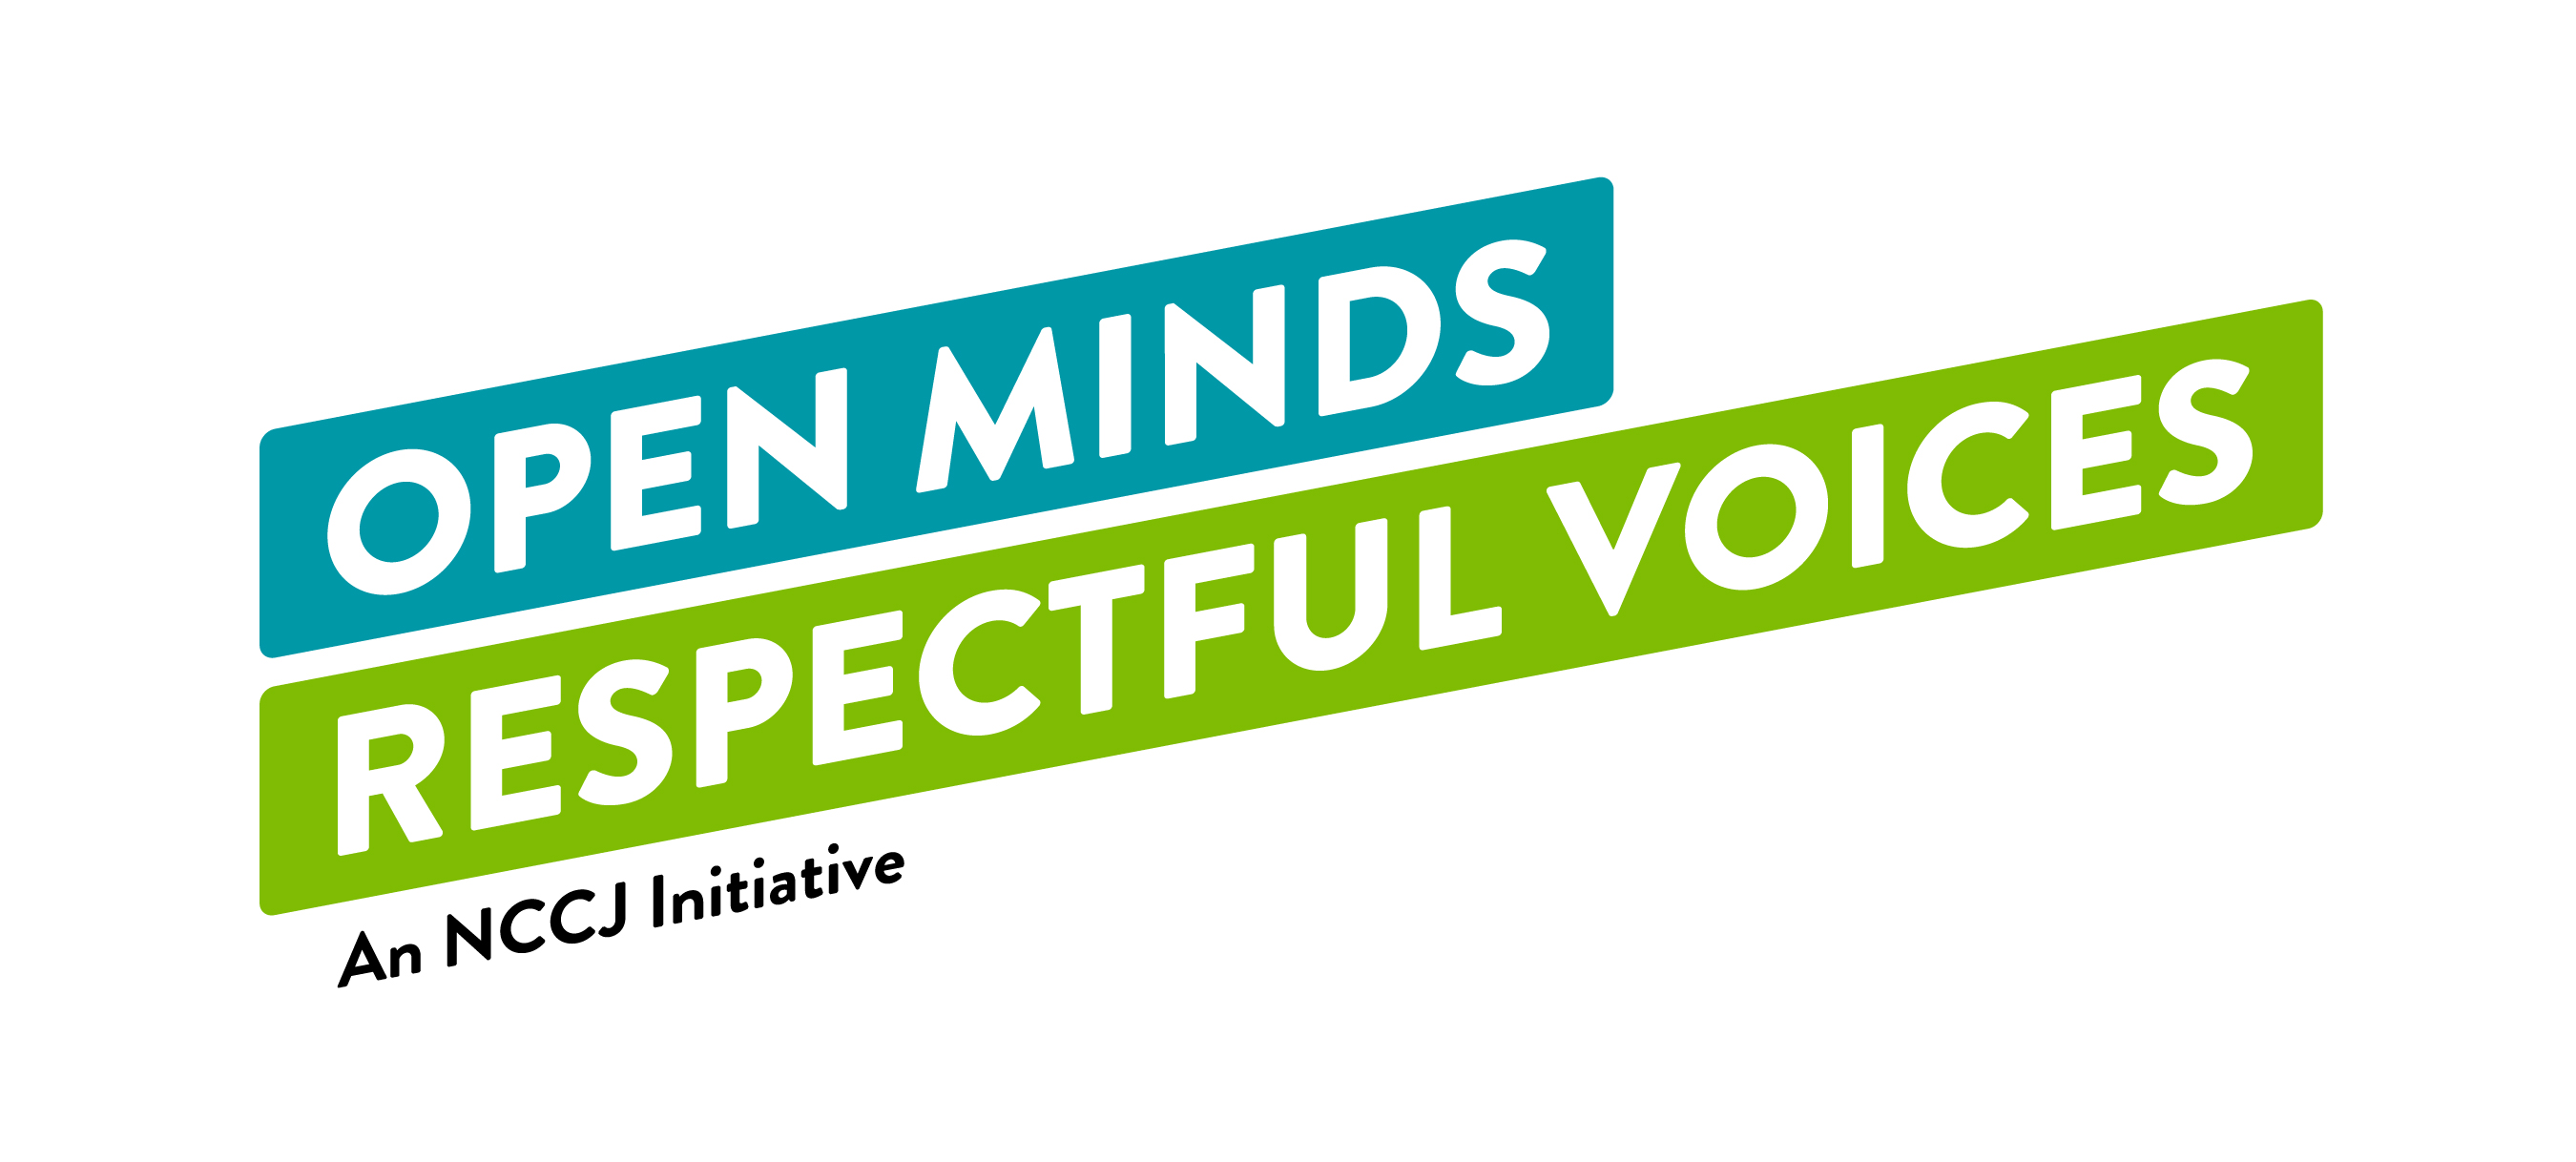 Open Minds, Respectful Voices: an NCCJ initiative